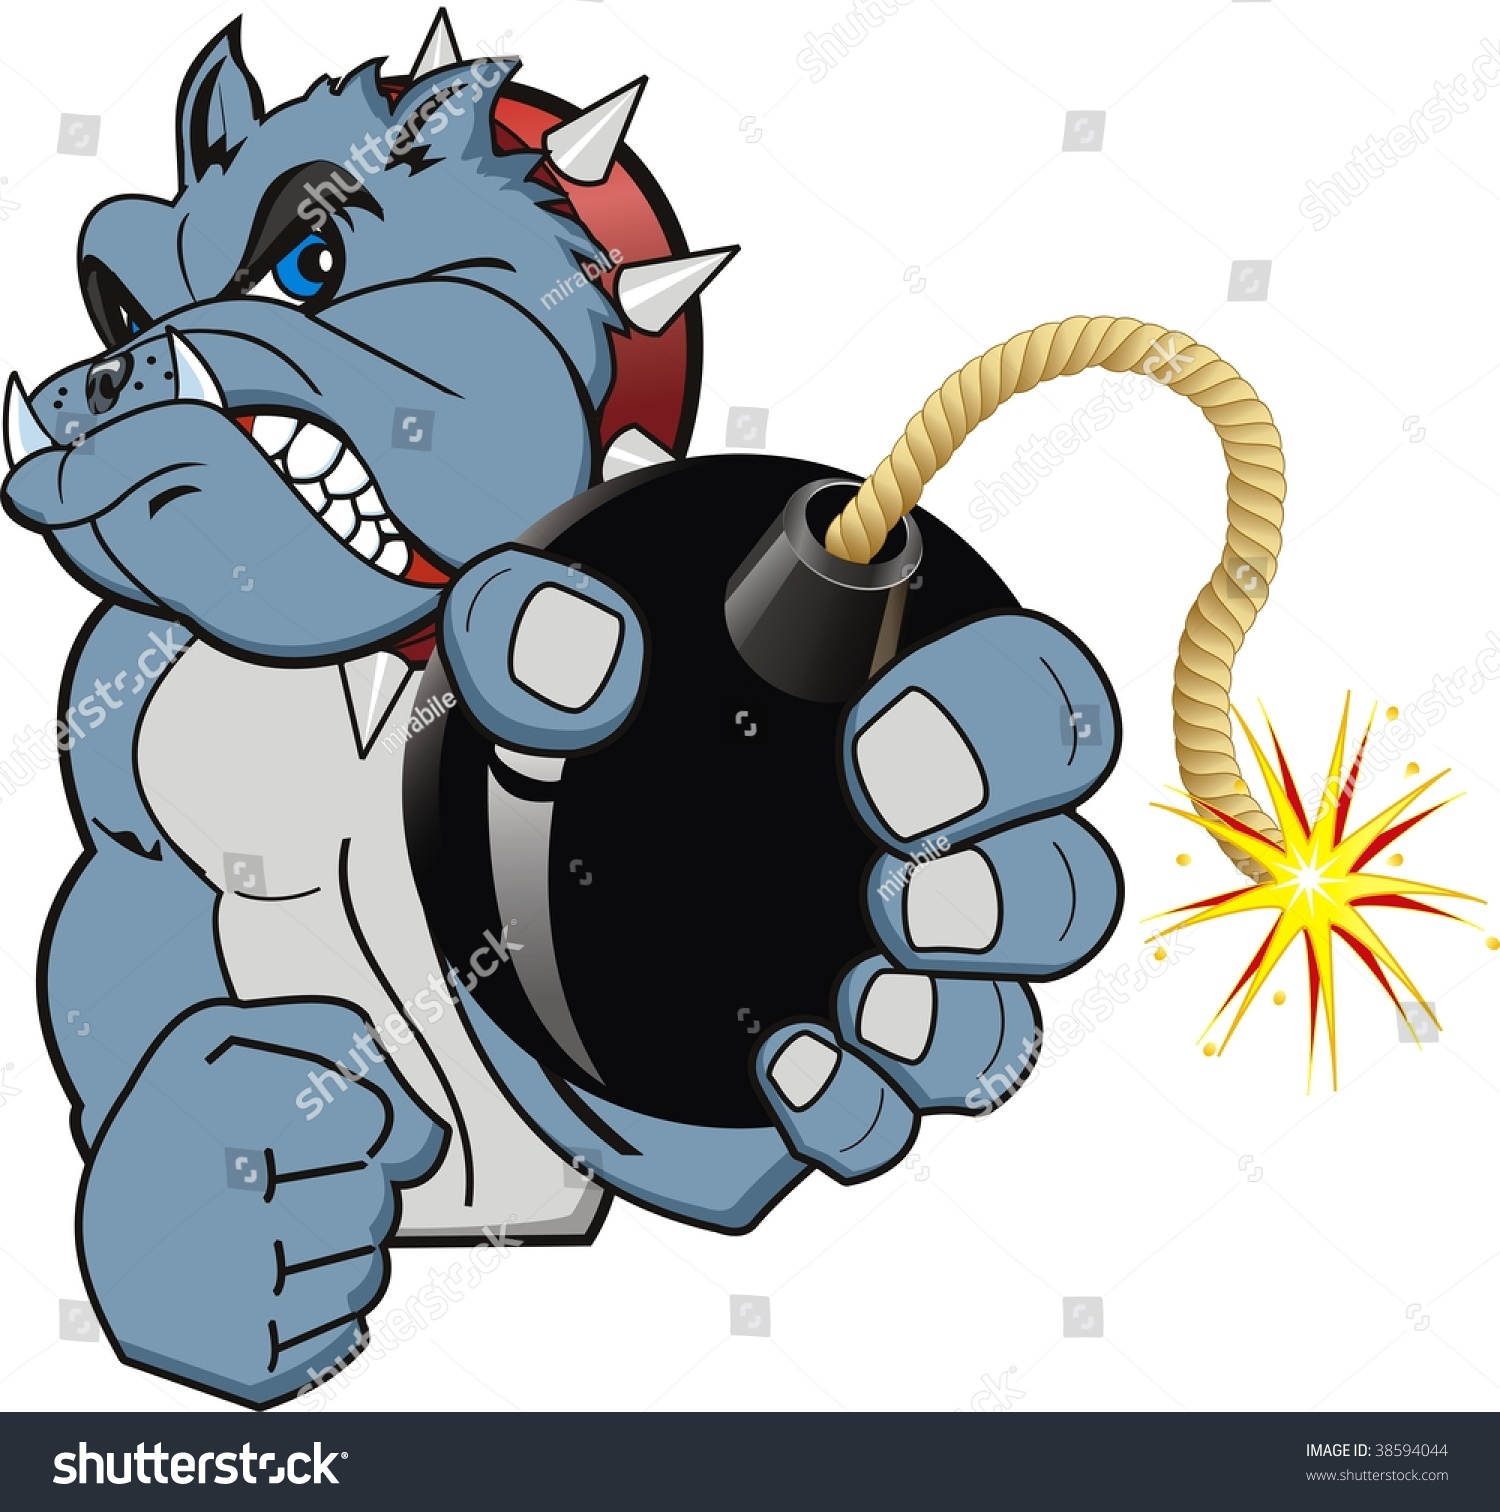 Cartoon Bomb Bulldog Vector Stock Vector 38594044 - Shutterstock